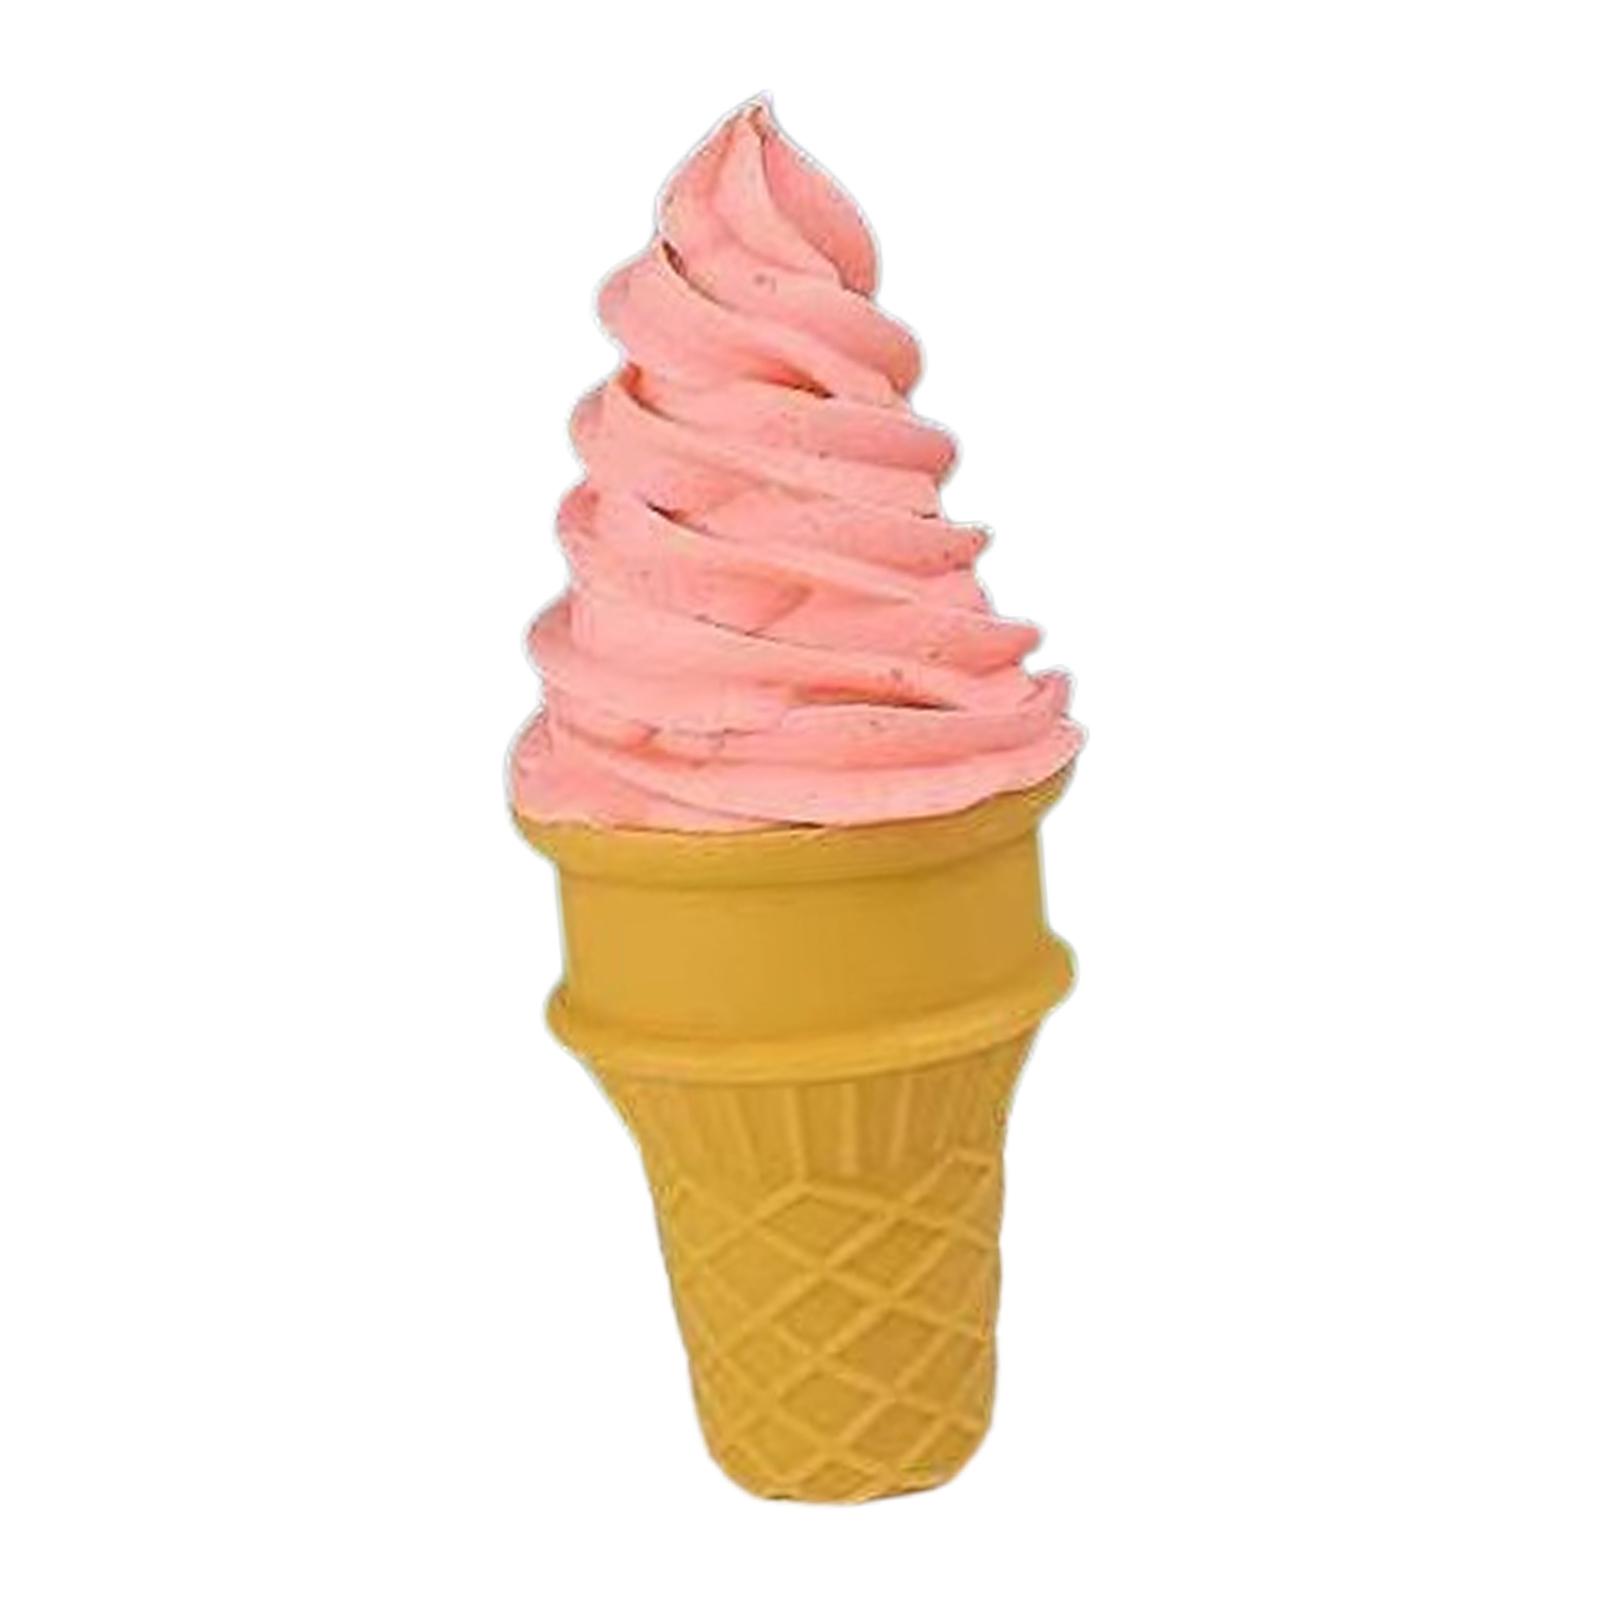 Fake Ice Cream Cone Food Model for Display Dessert Photo Props Desktop Decor Pink